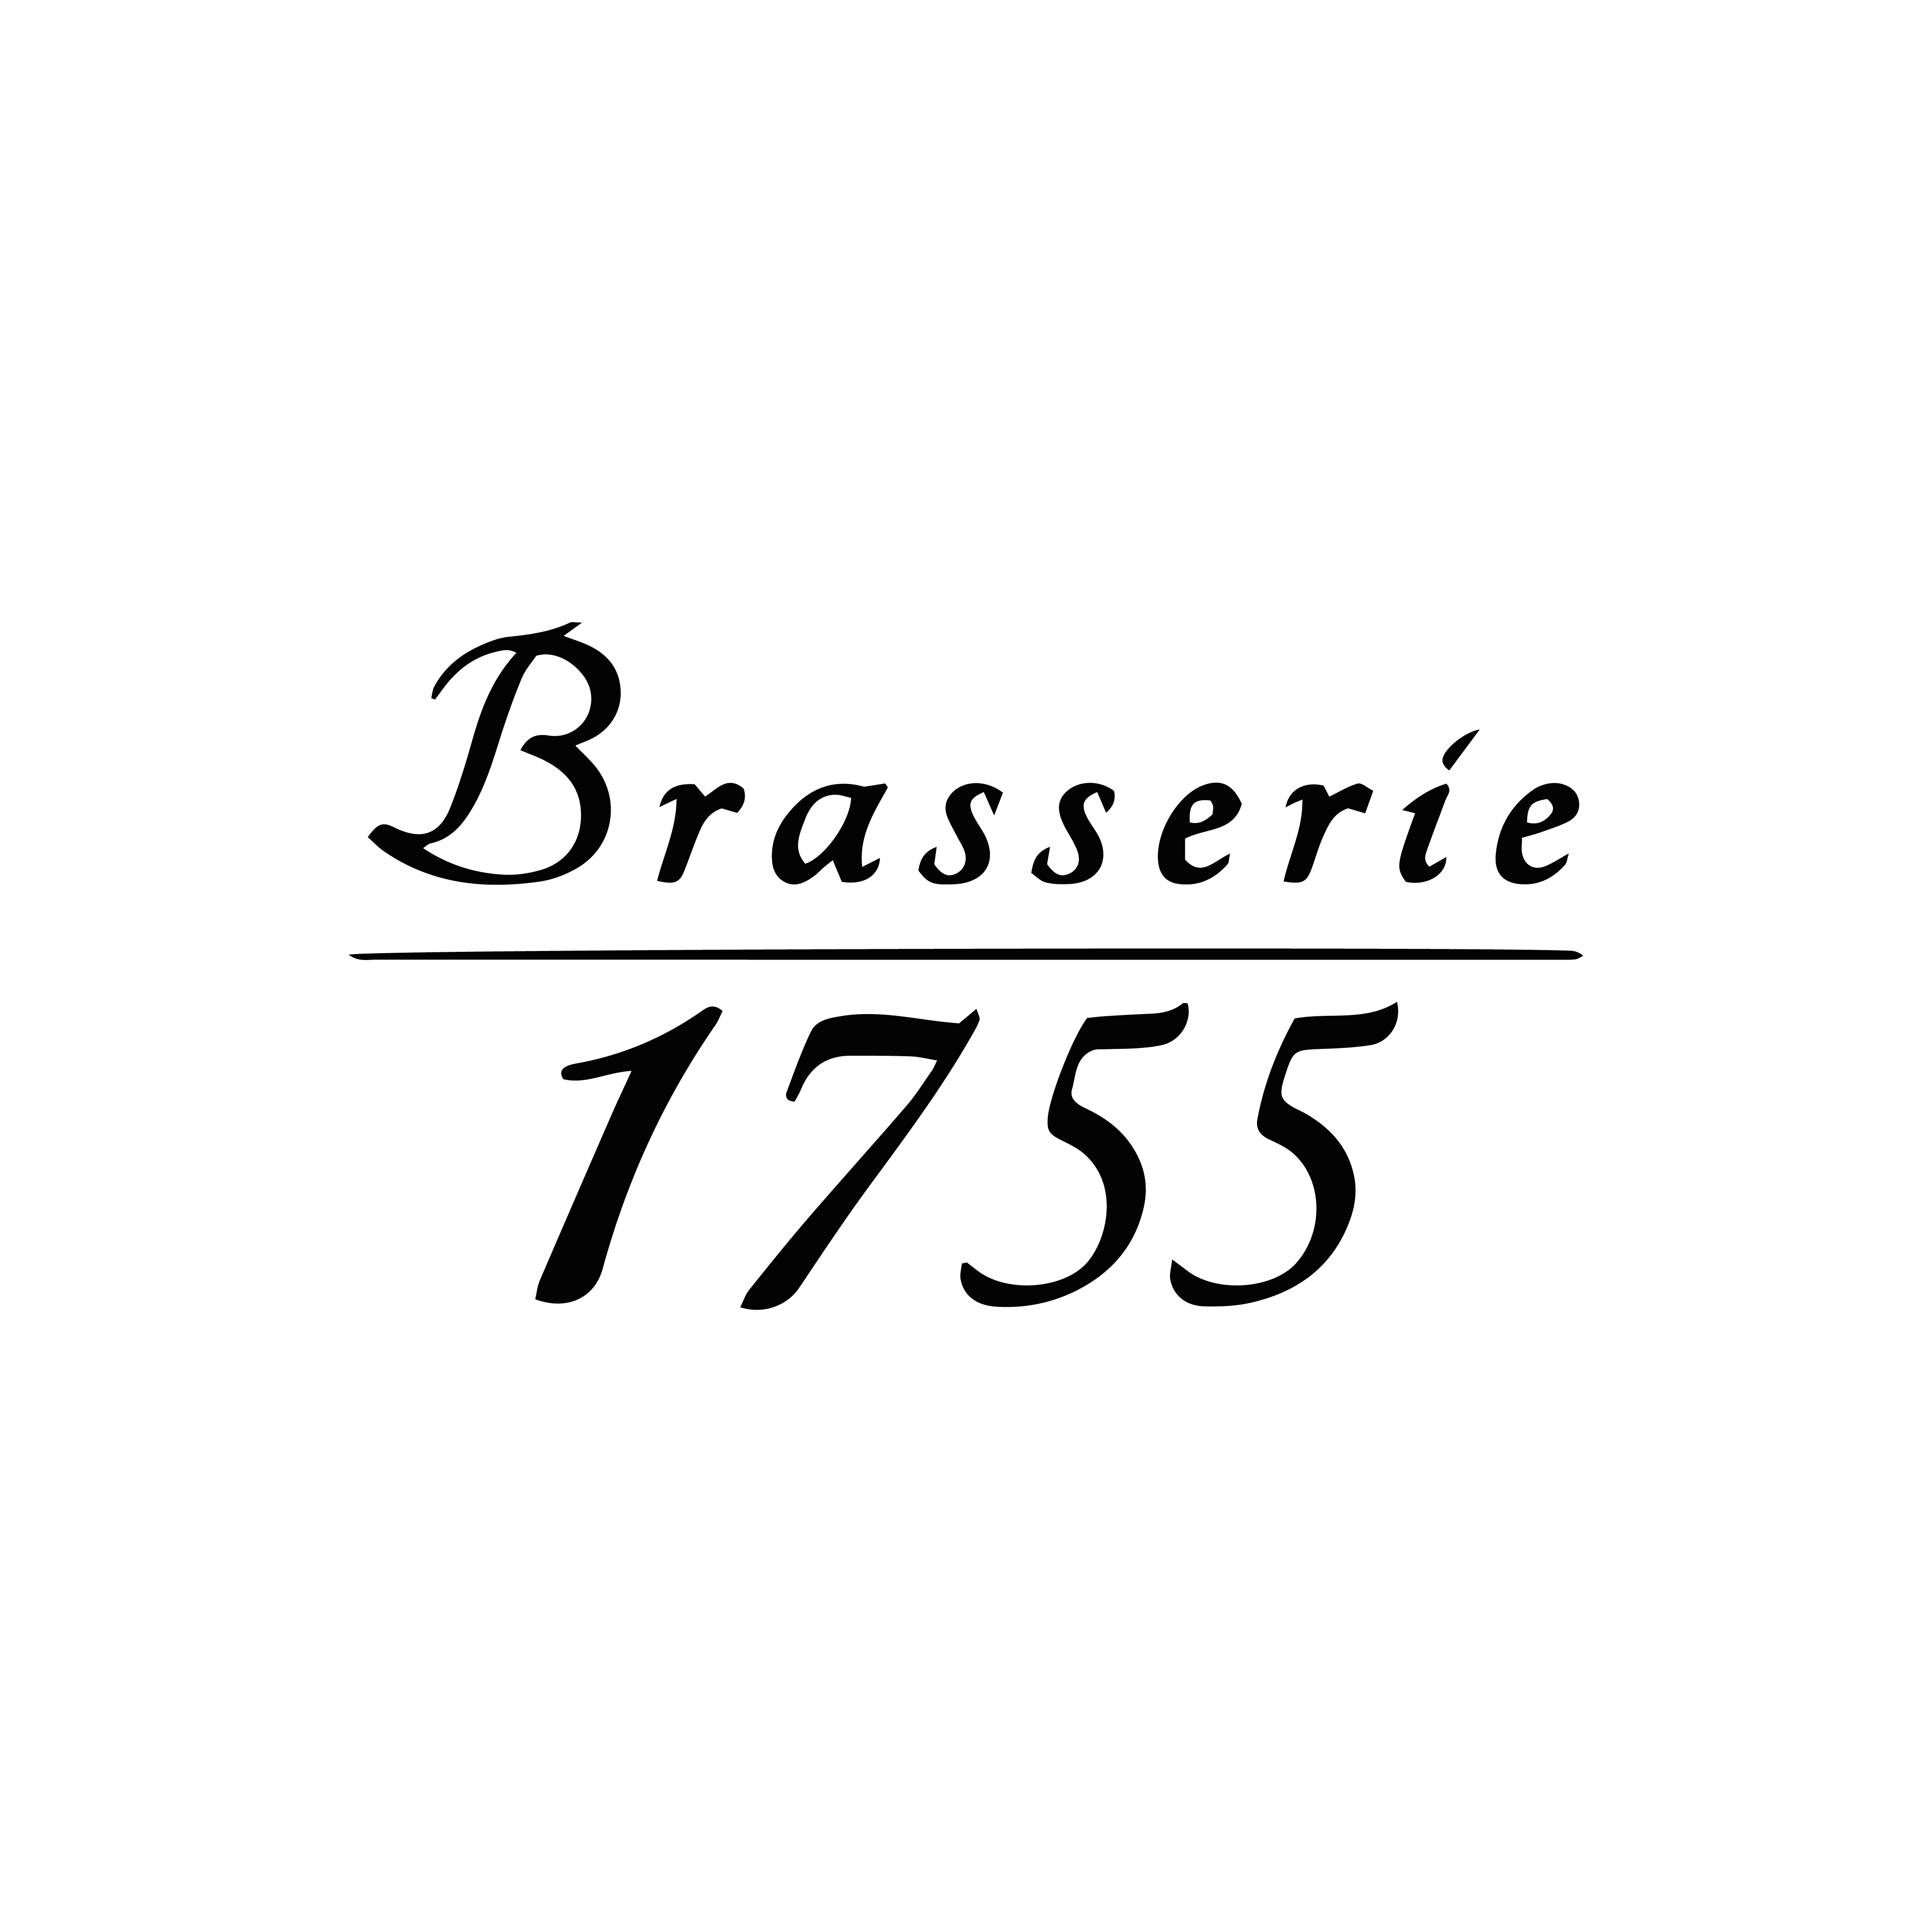 Brasserie 1755